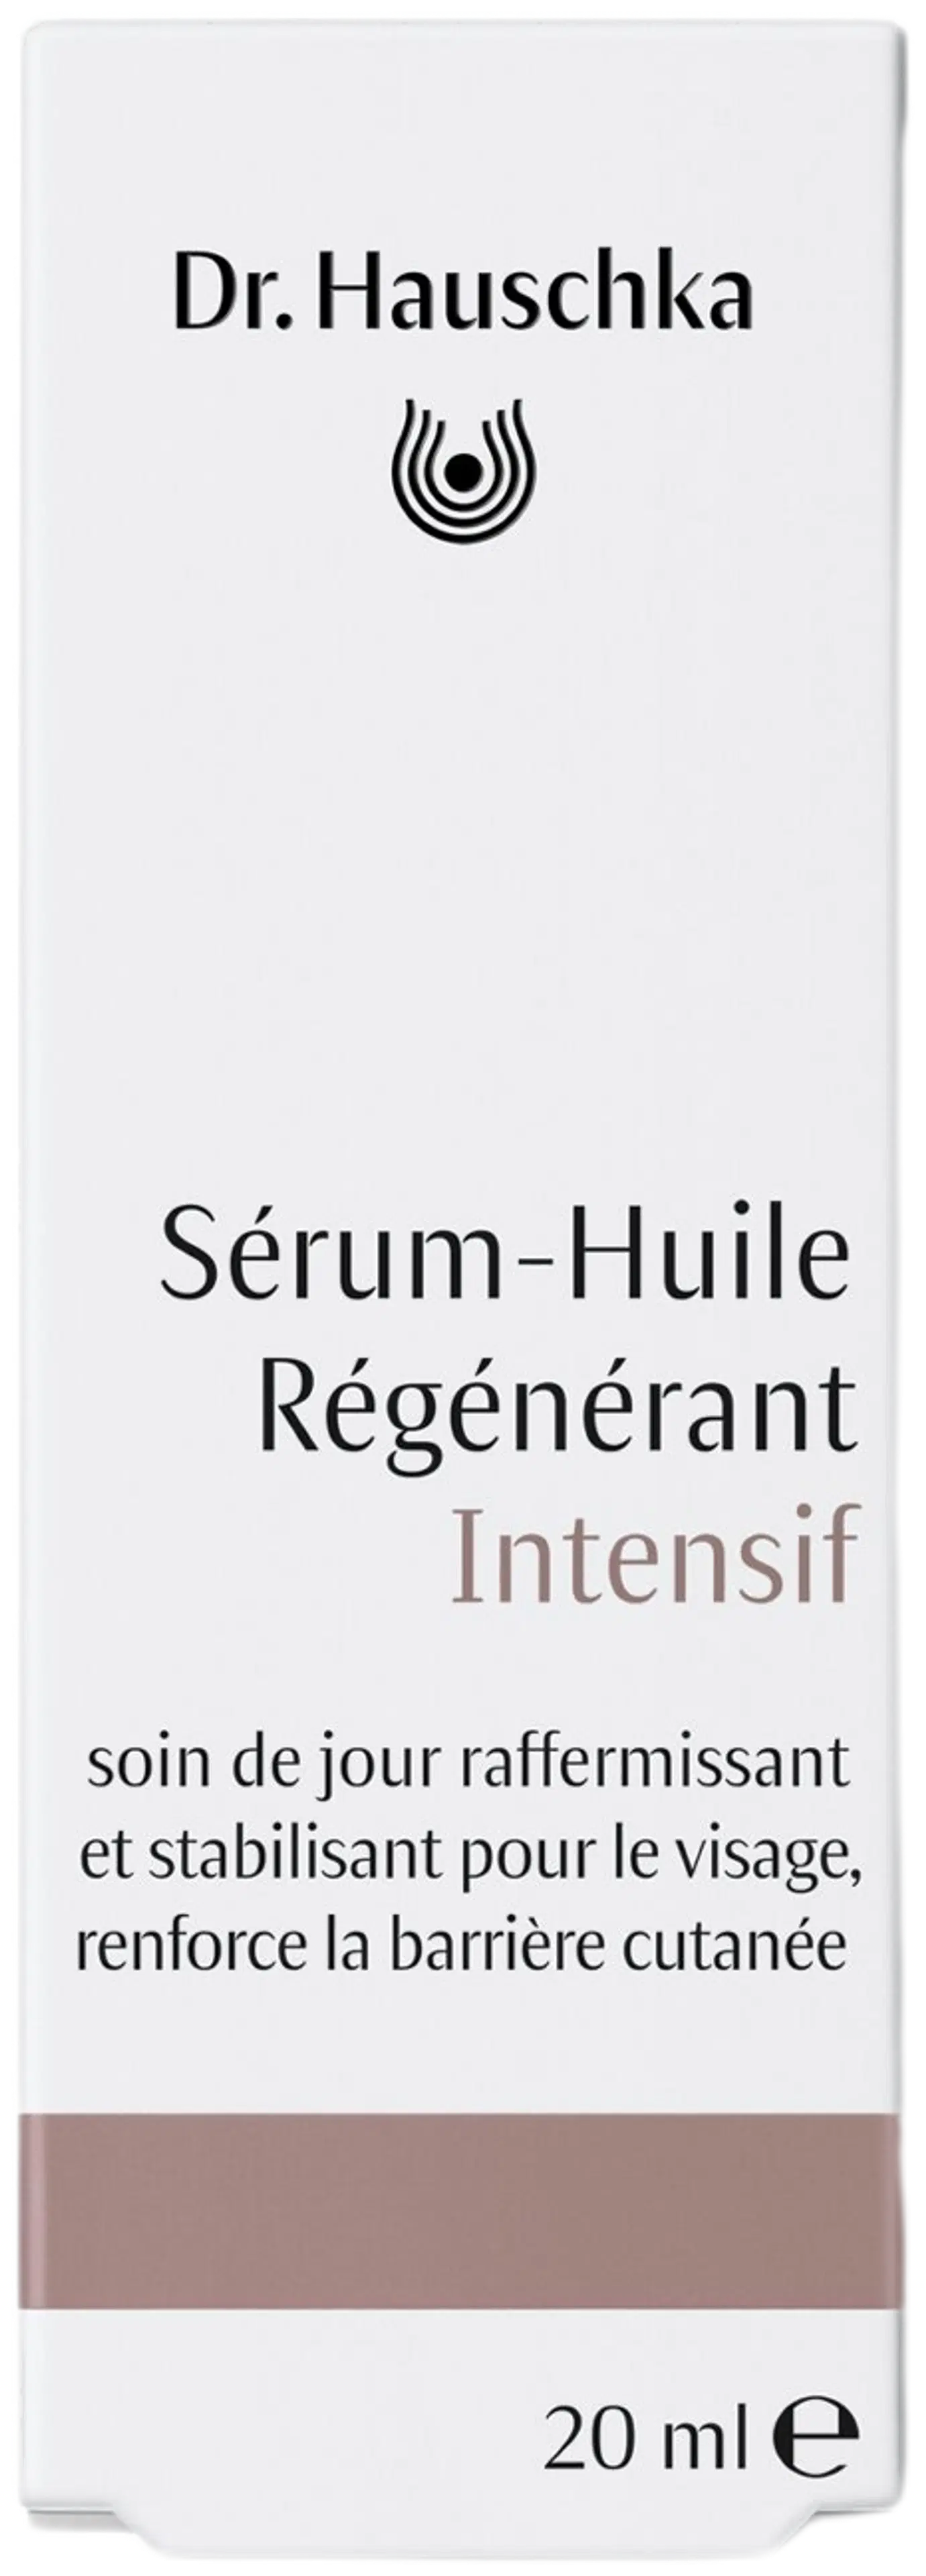 Dr. Hauschka Regenerating Oil Serum öljyseerumi 20 ml